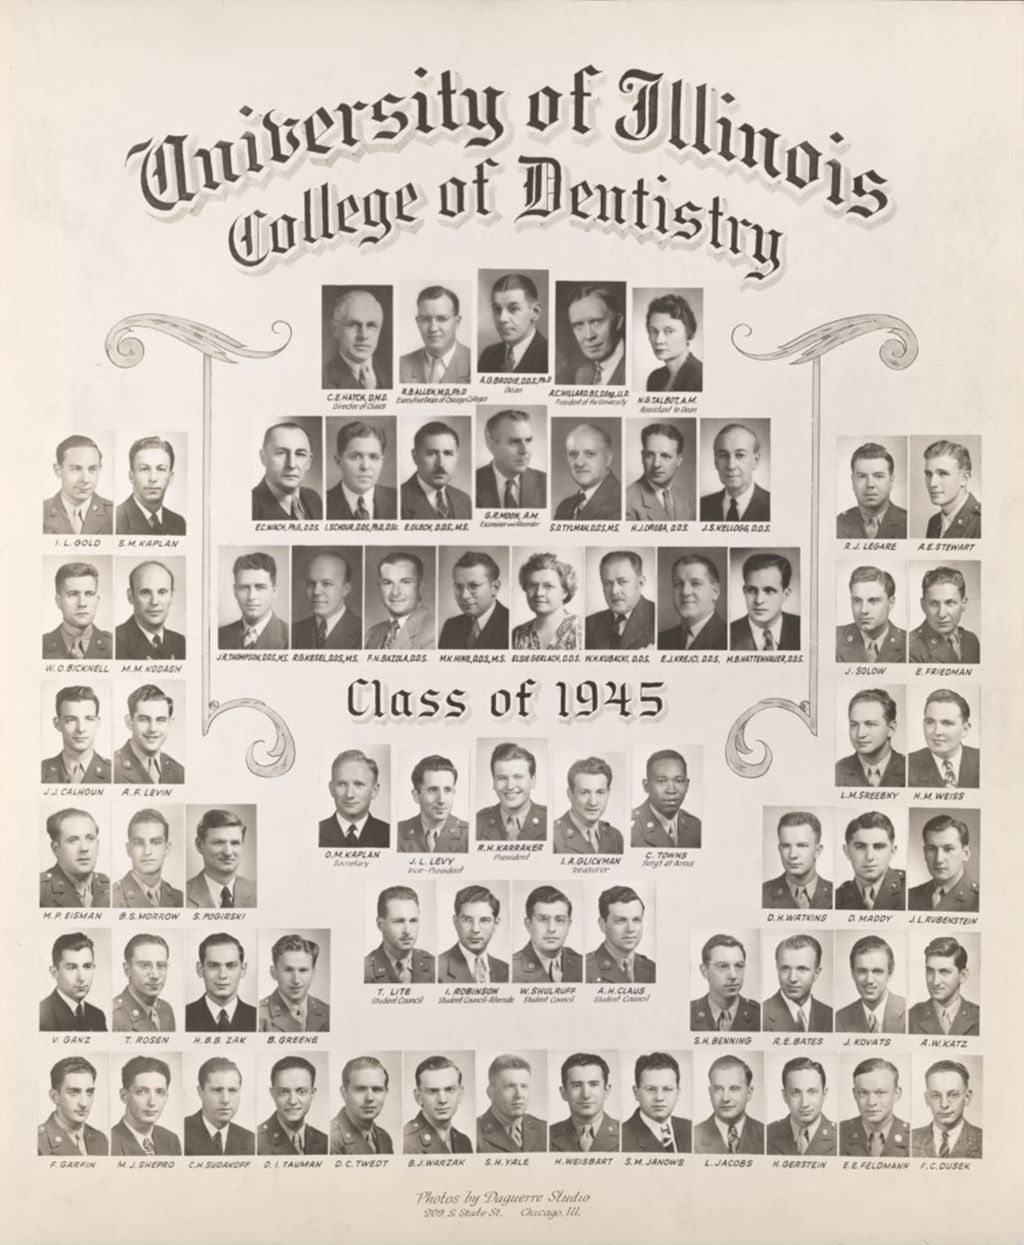 Miniature of 1945 graduating class, University of Illinois College of Dentistry